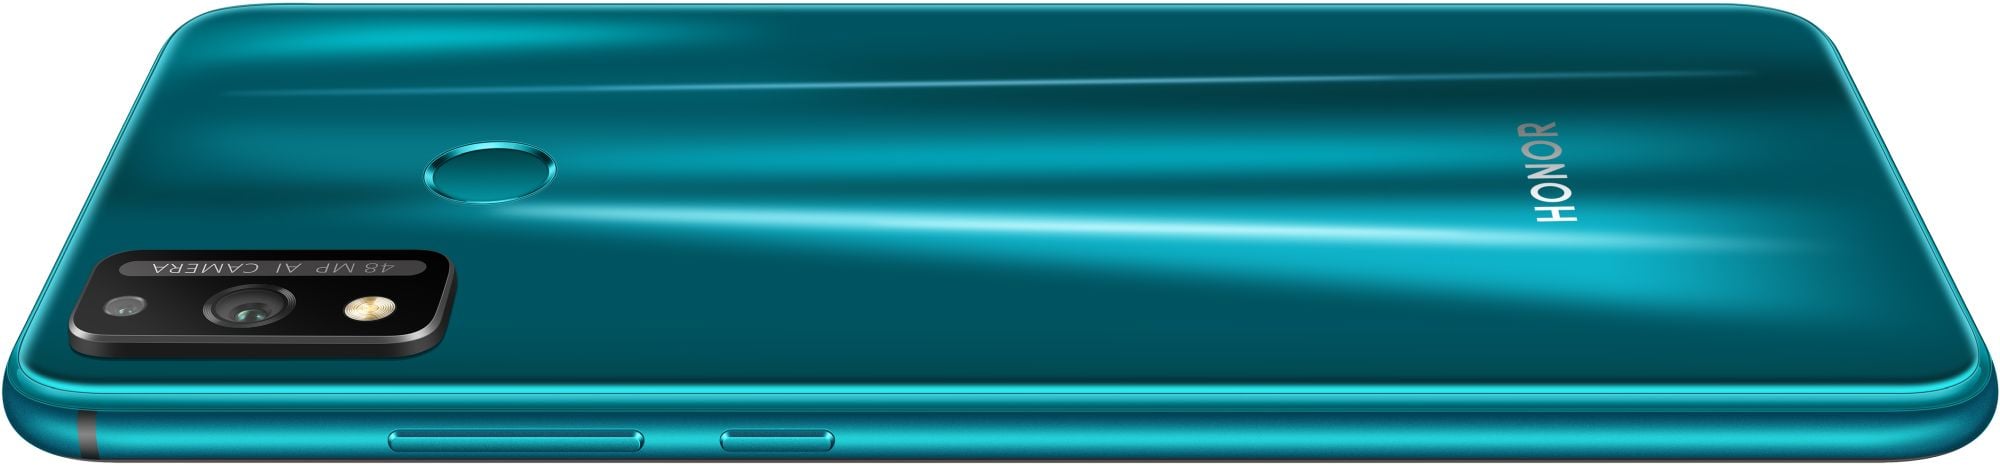 Huawei Honor 9X Lite 128GB green